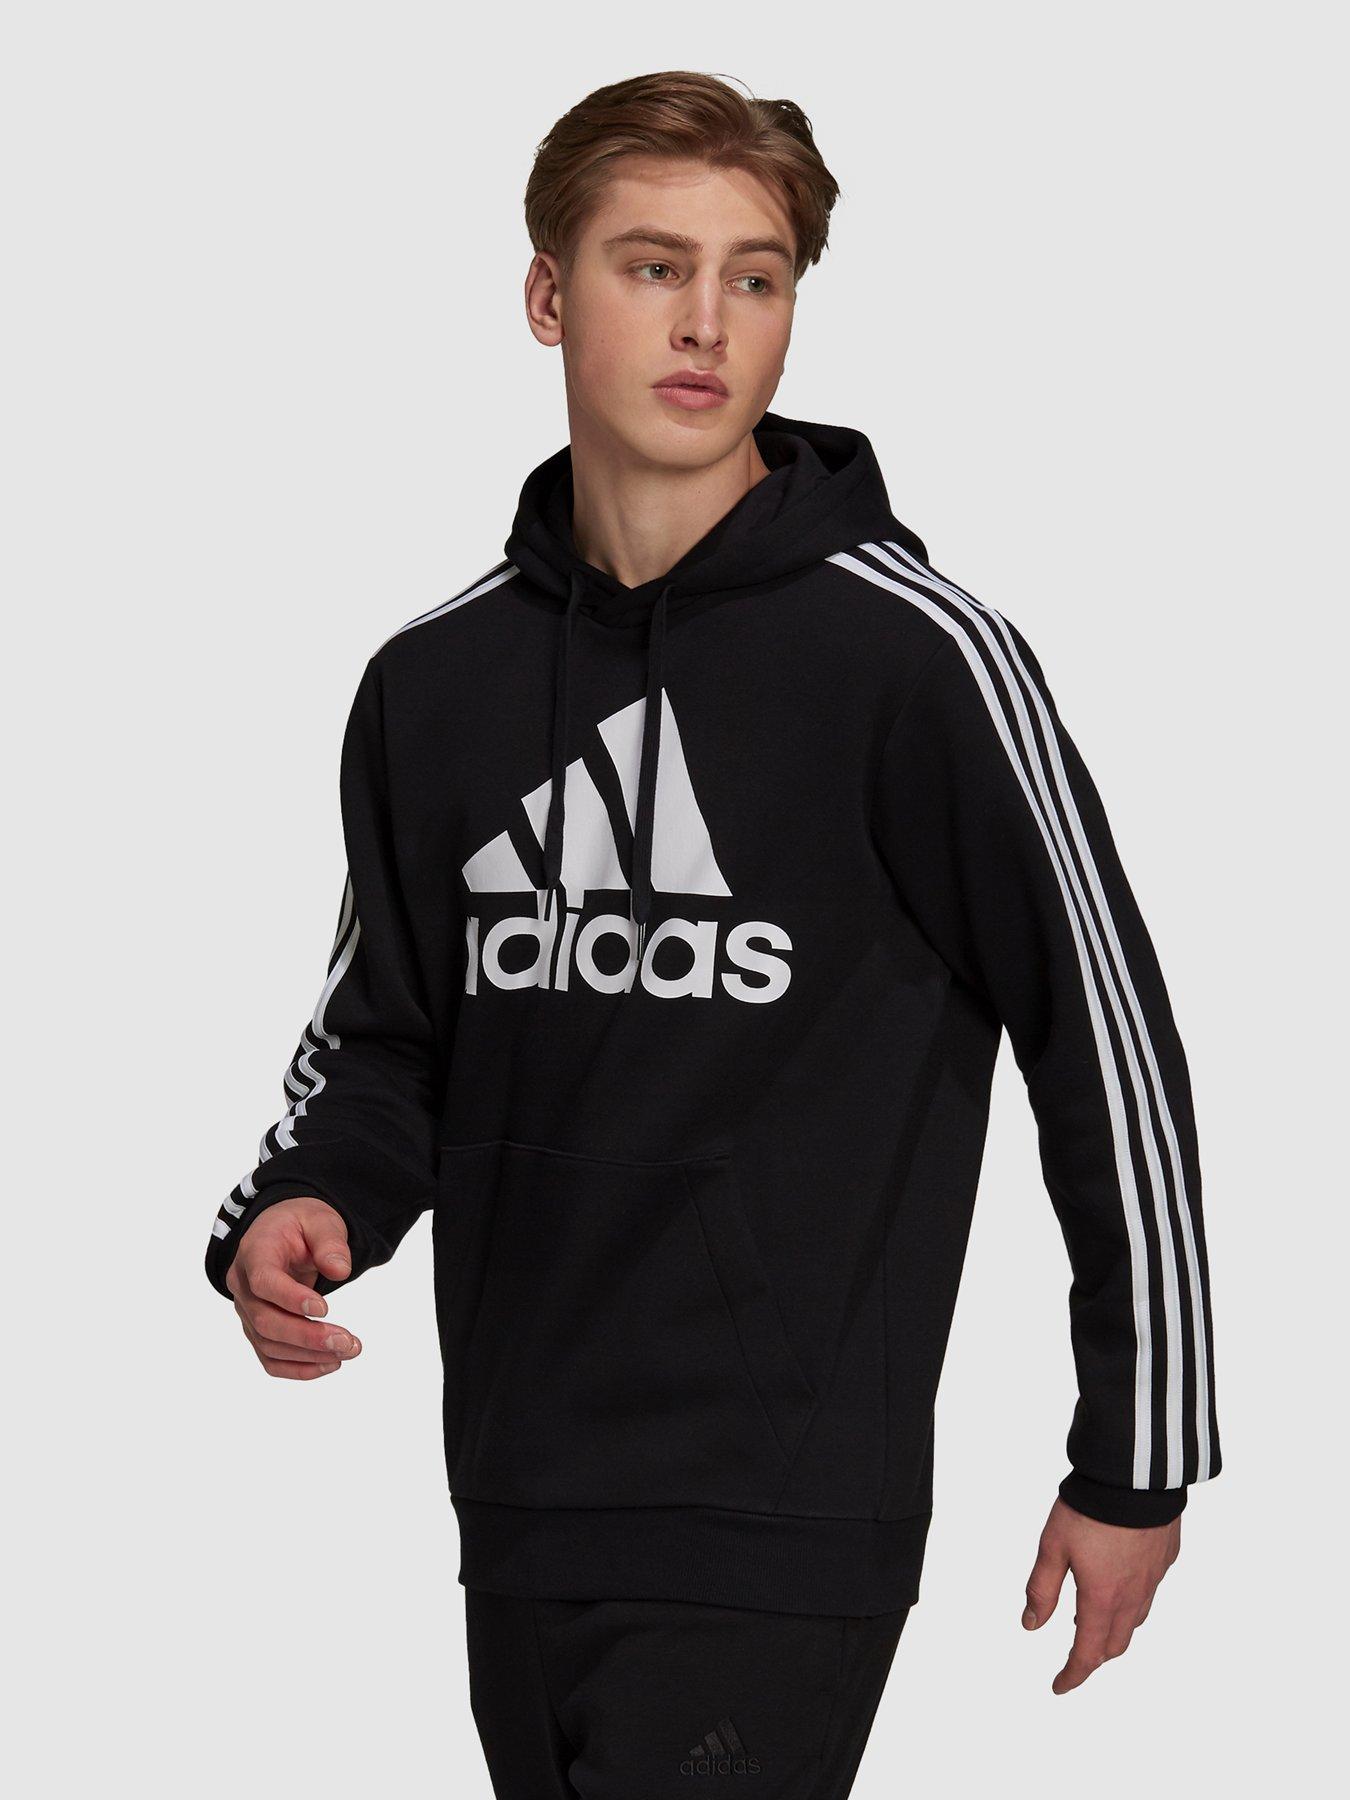 Krigsfanger Mejeriprodukter Creed 4XL | Adidas | Hoodies & sweatshirts | Sportswear | Men | Very Ireland